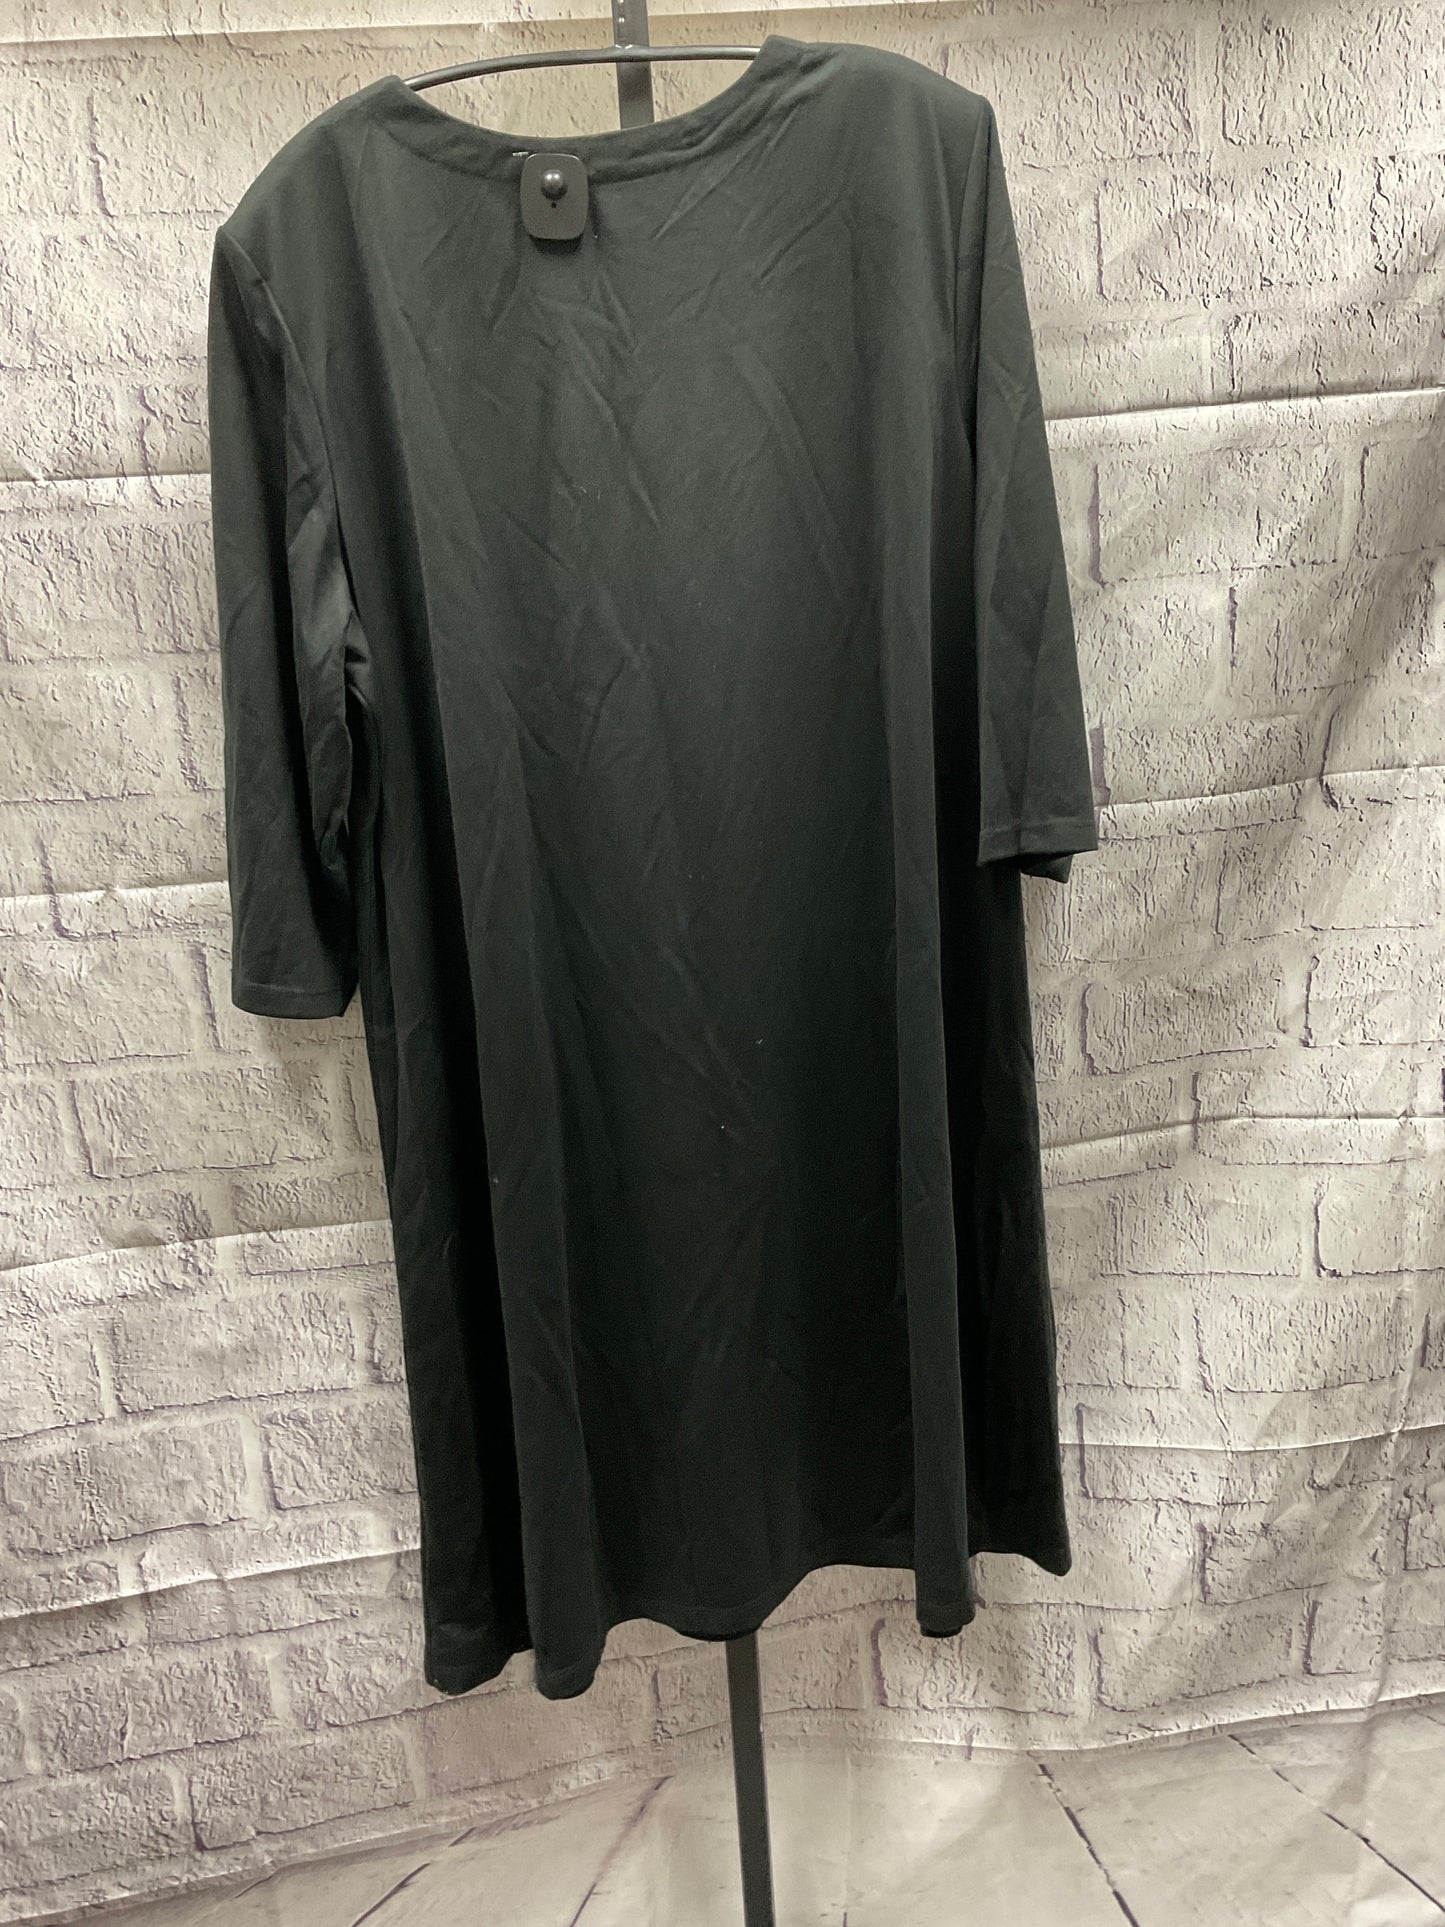 Dress Casual Midi By Susan Graver  Size: 2x